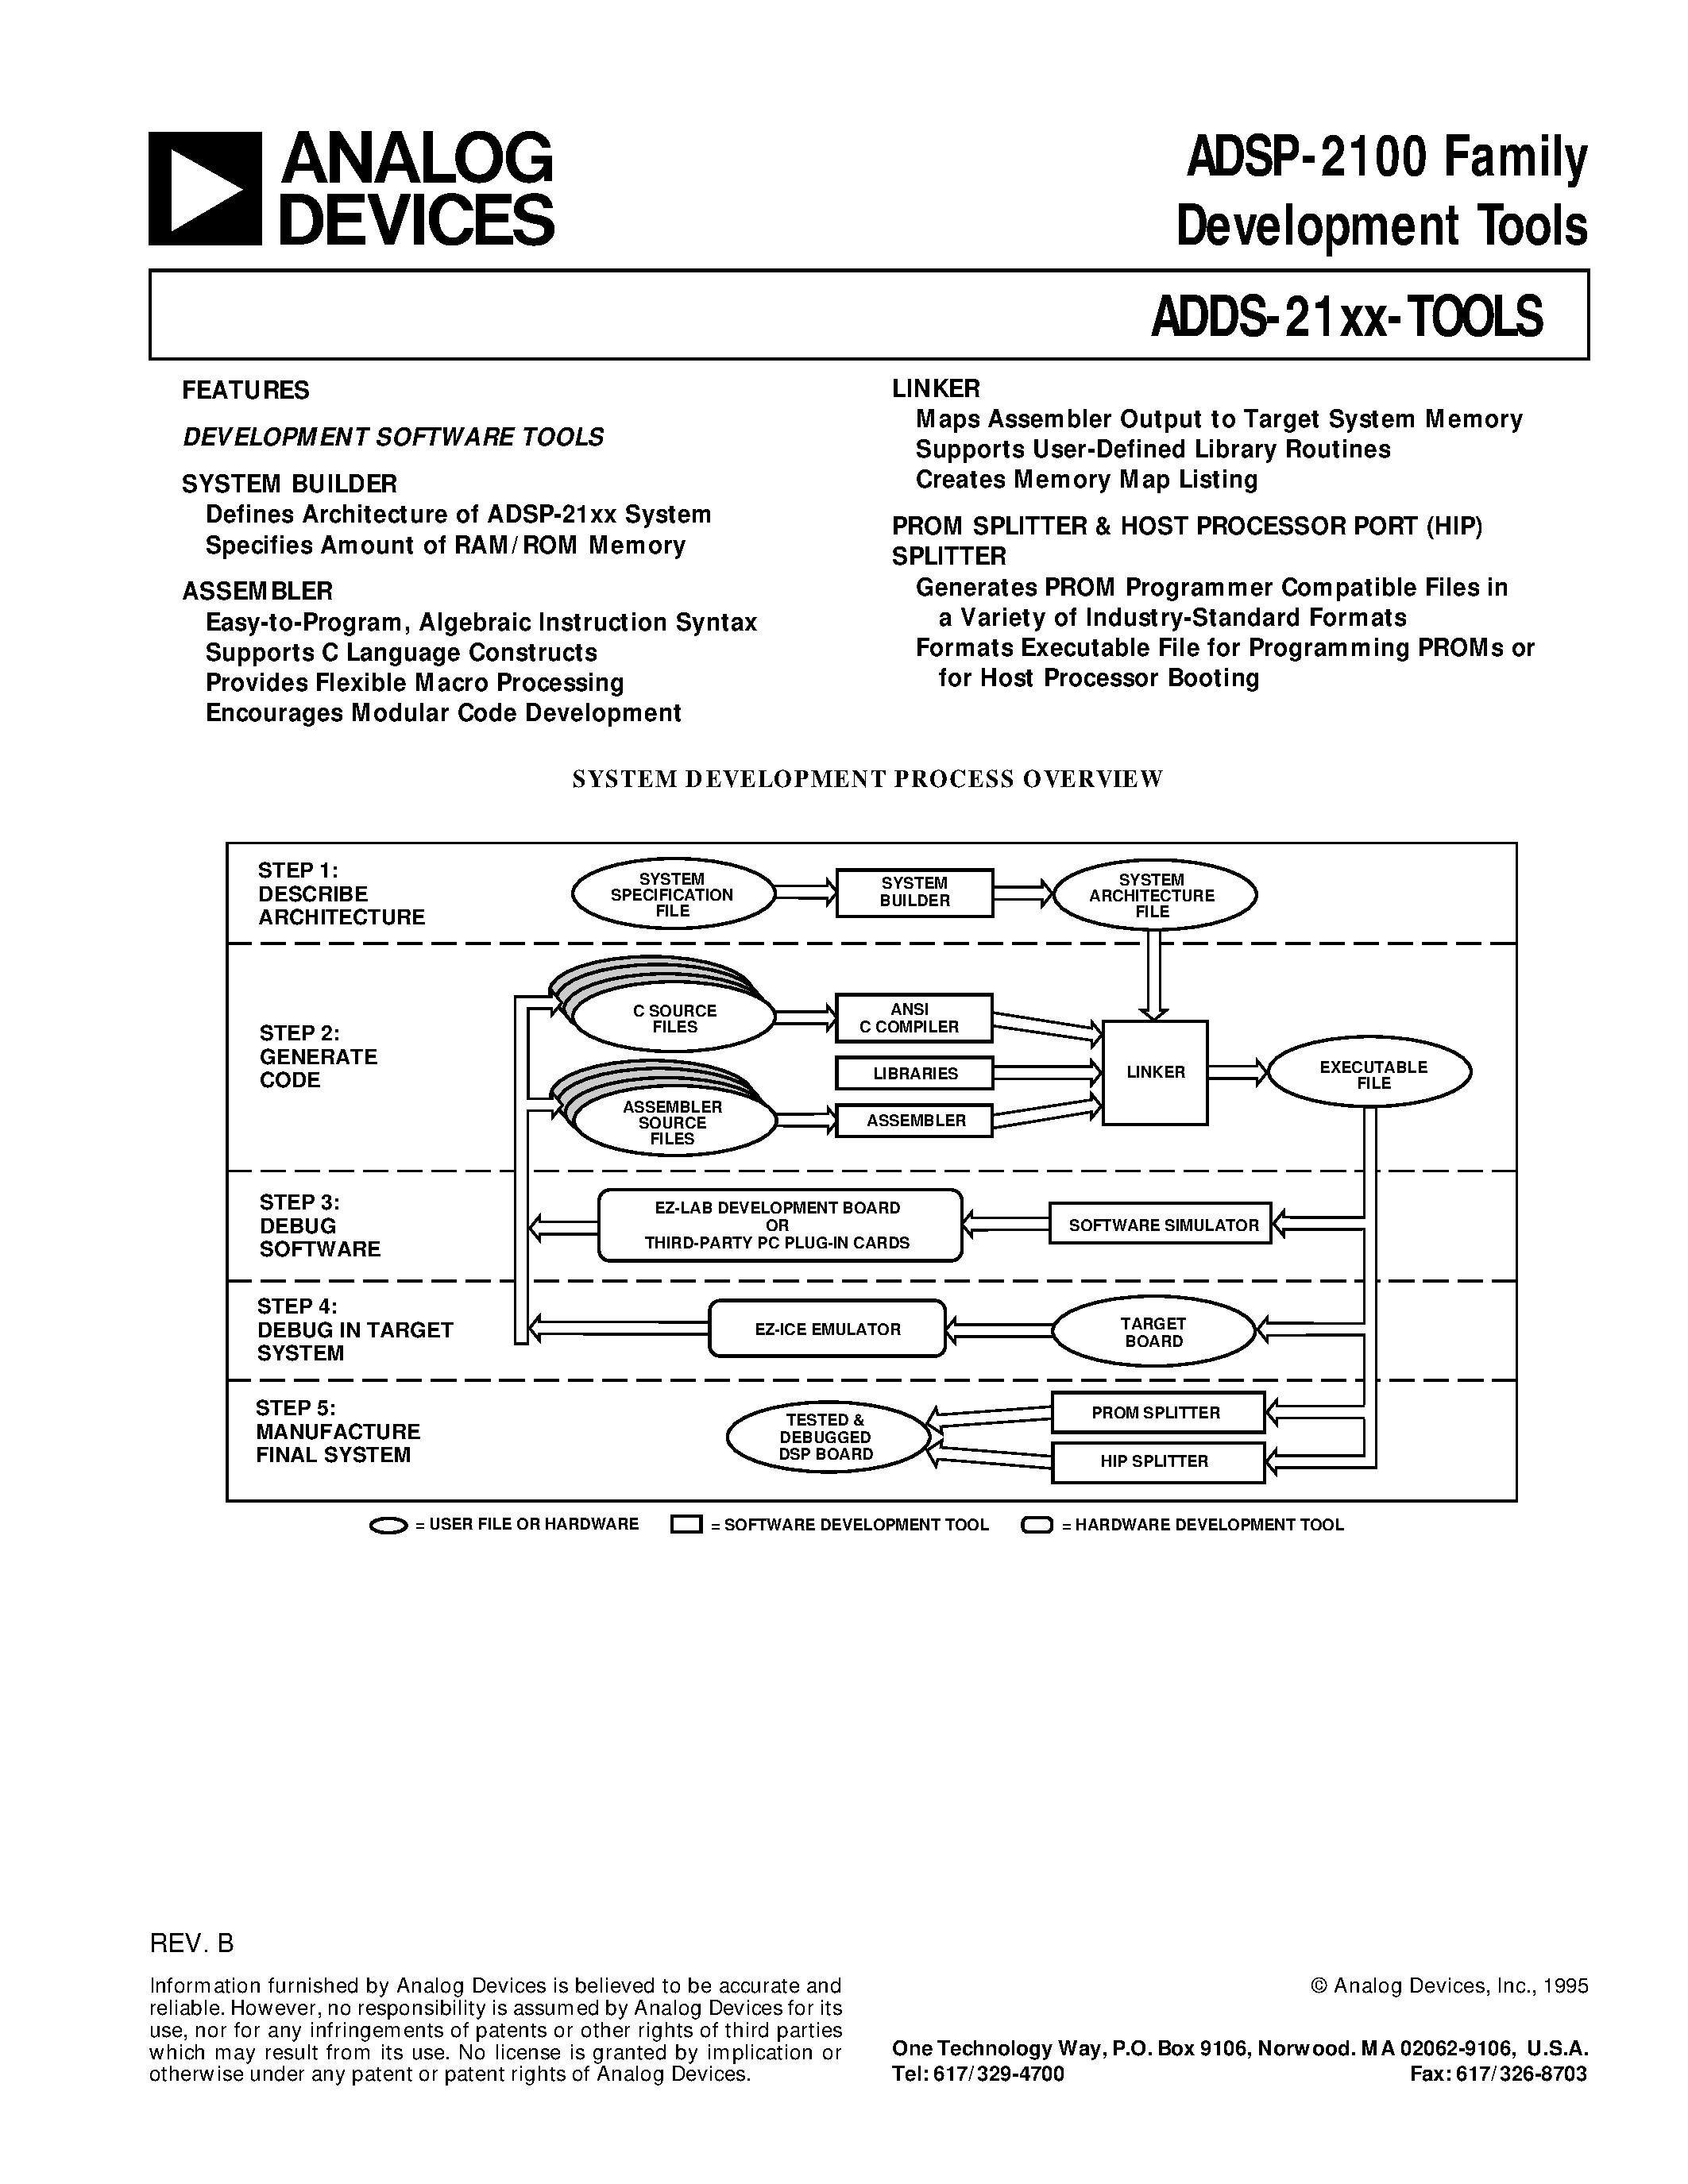 Datasheet ADDS-2101-EZ-KIT - ADSP-2100 Family Development Tools page 1